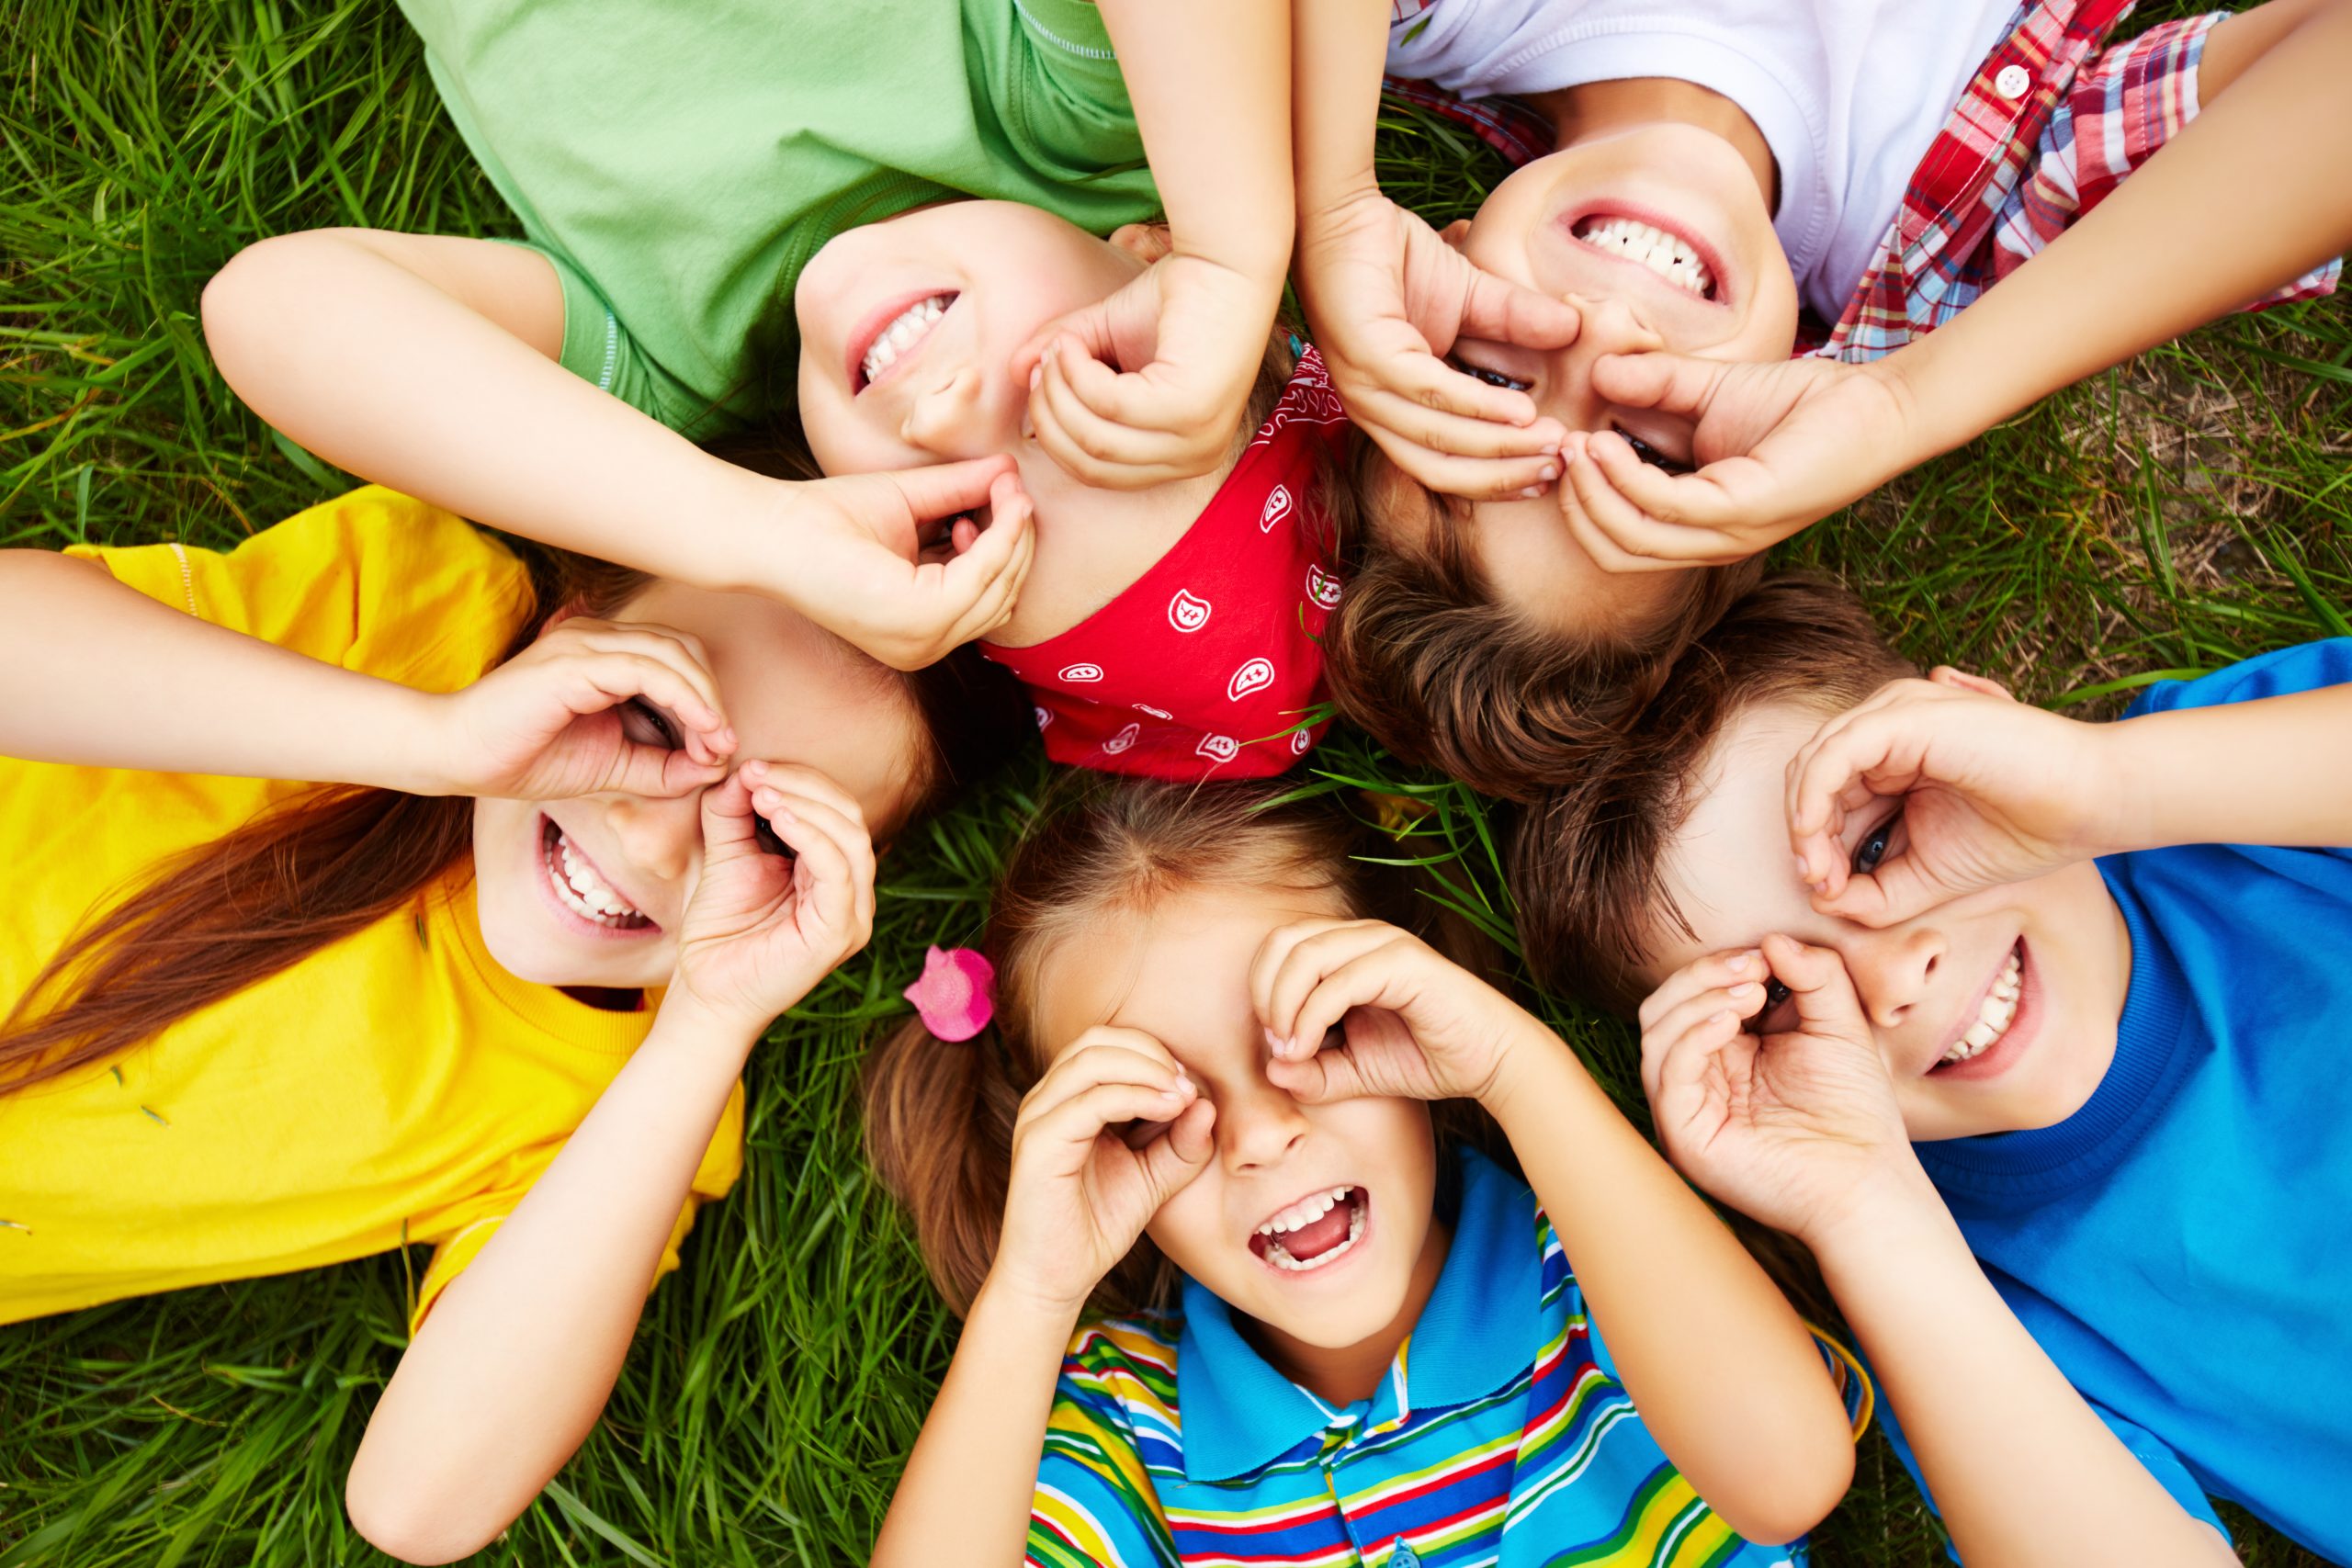 5 Tips to Help Kids Look Their Best